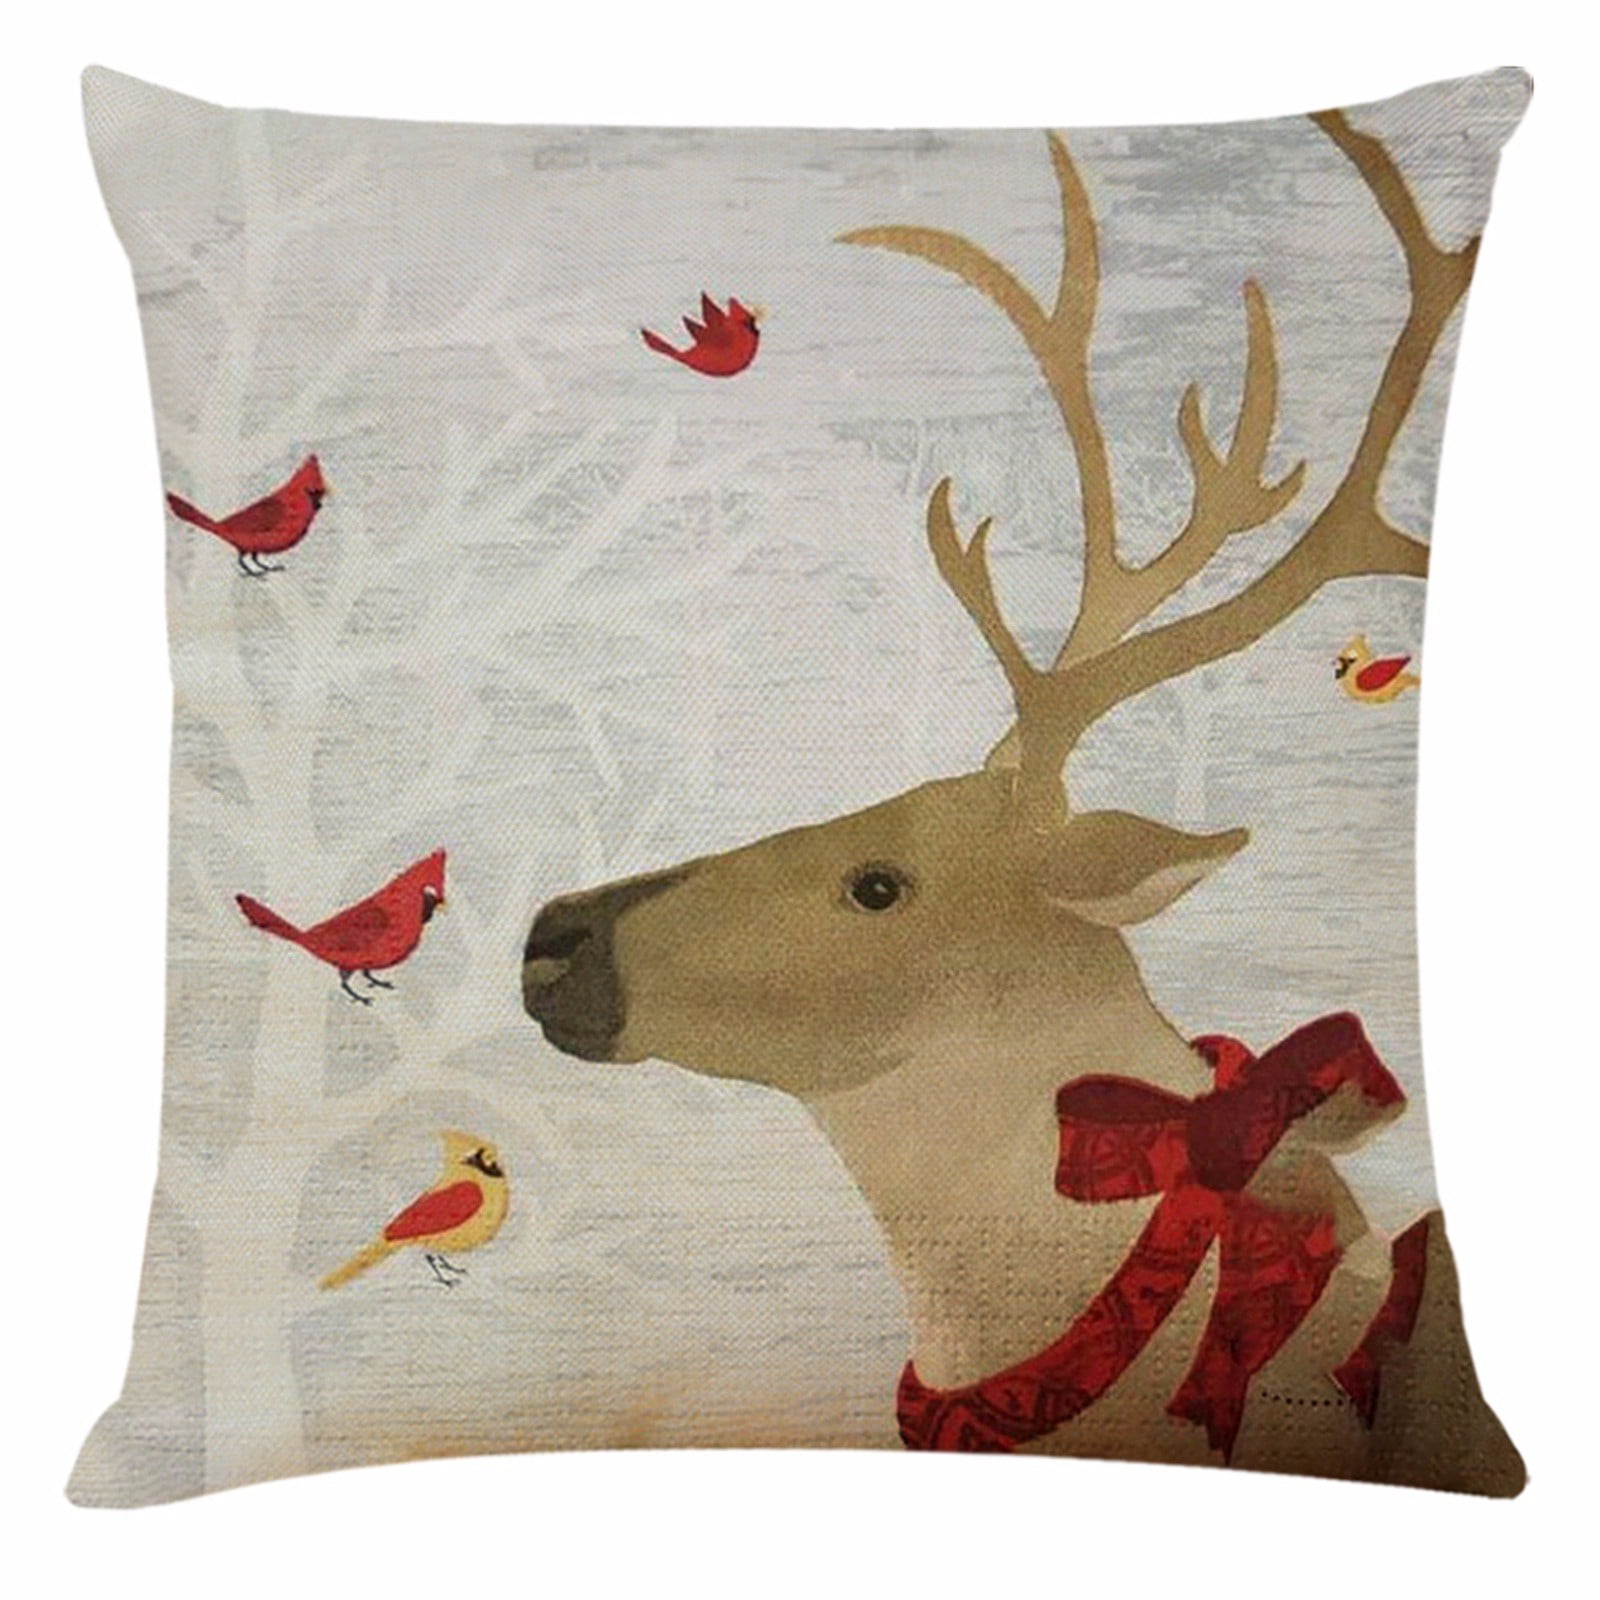 Cozy Winter/Deer Themed Fleece Pillow Case/Cover 20x20 